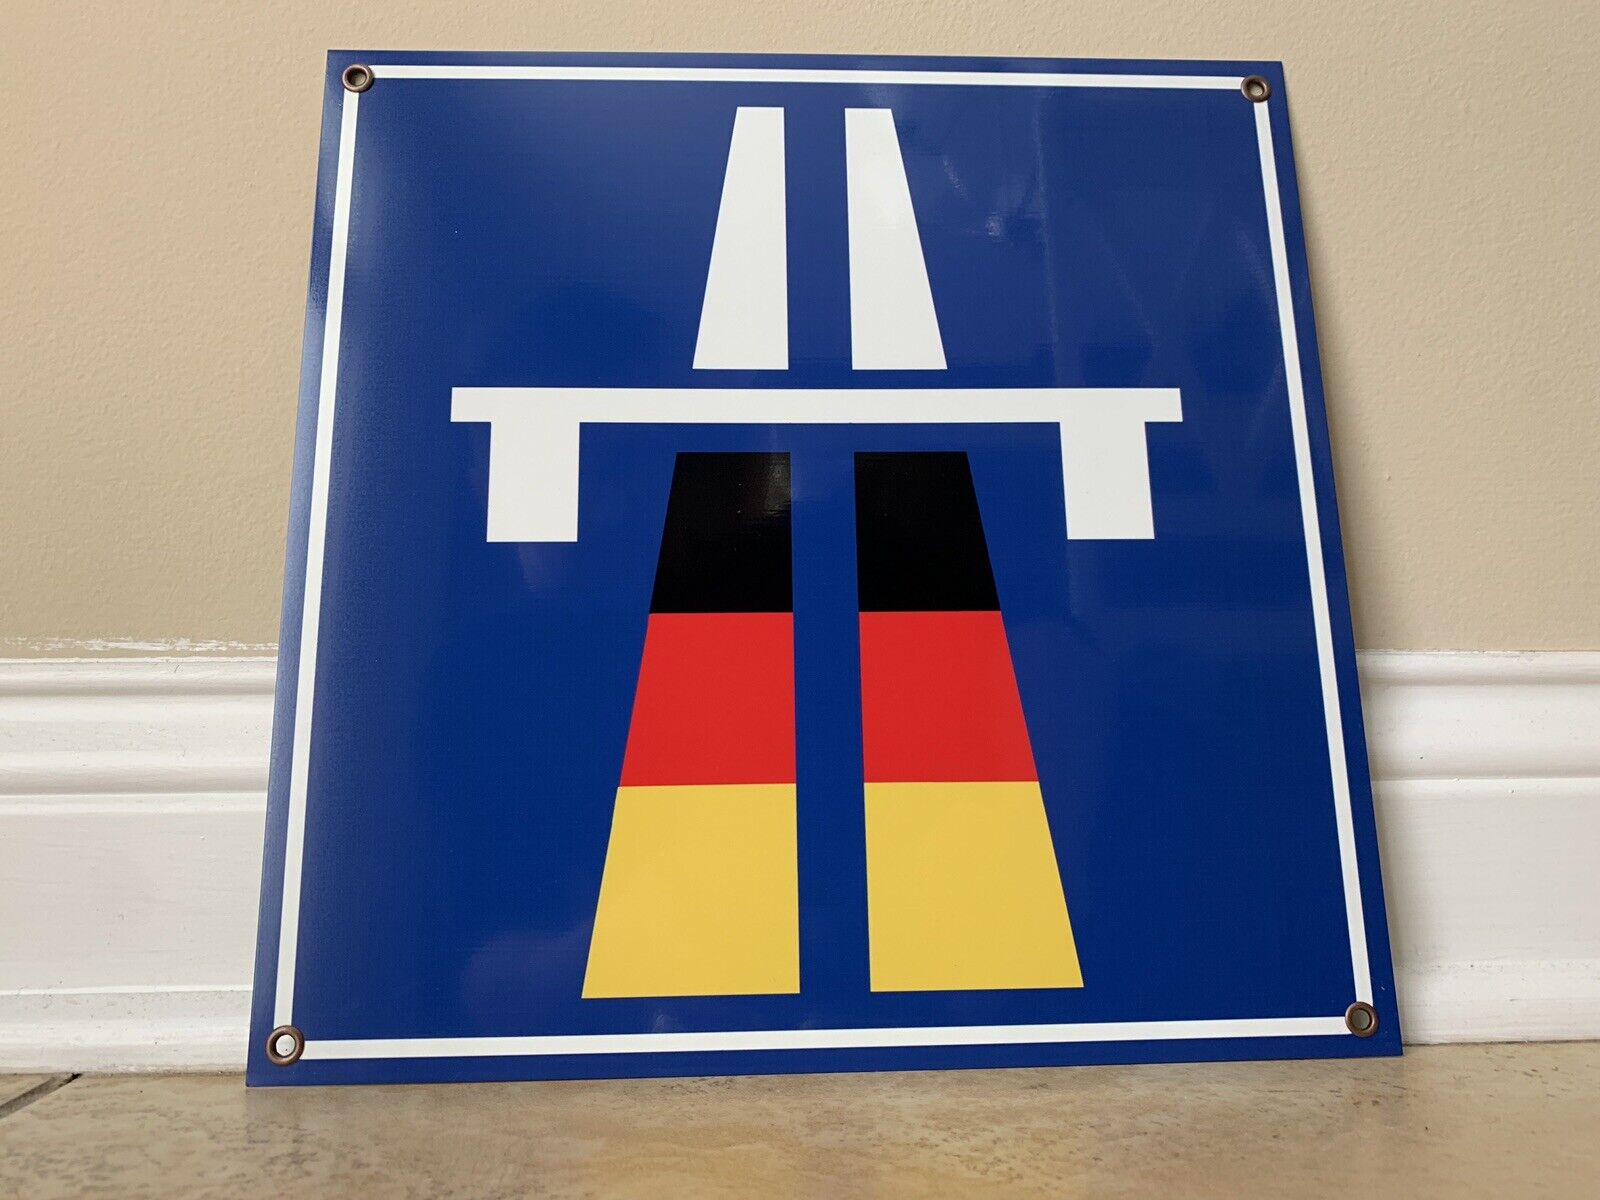 Autobahn road sign German European Porsche BMW Mercedes Audi vw